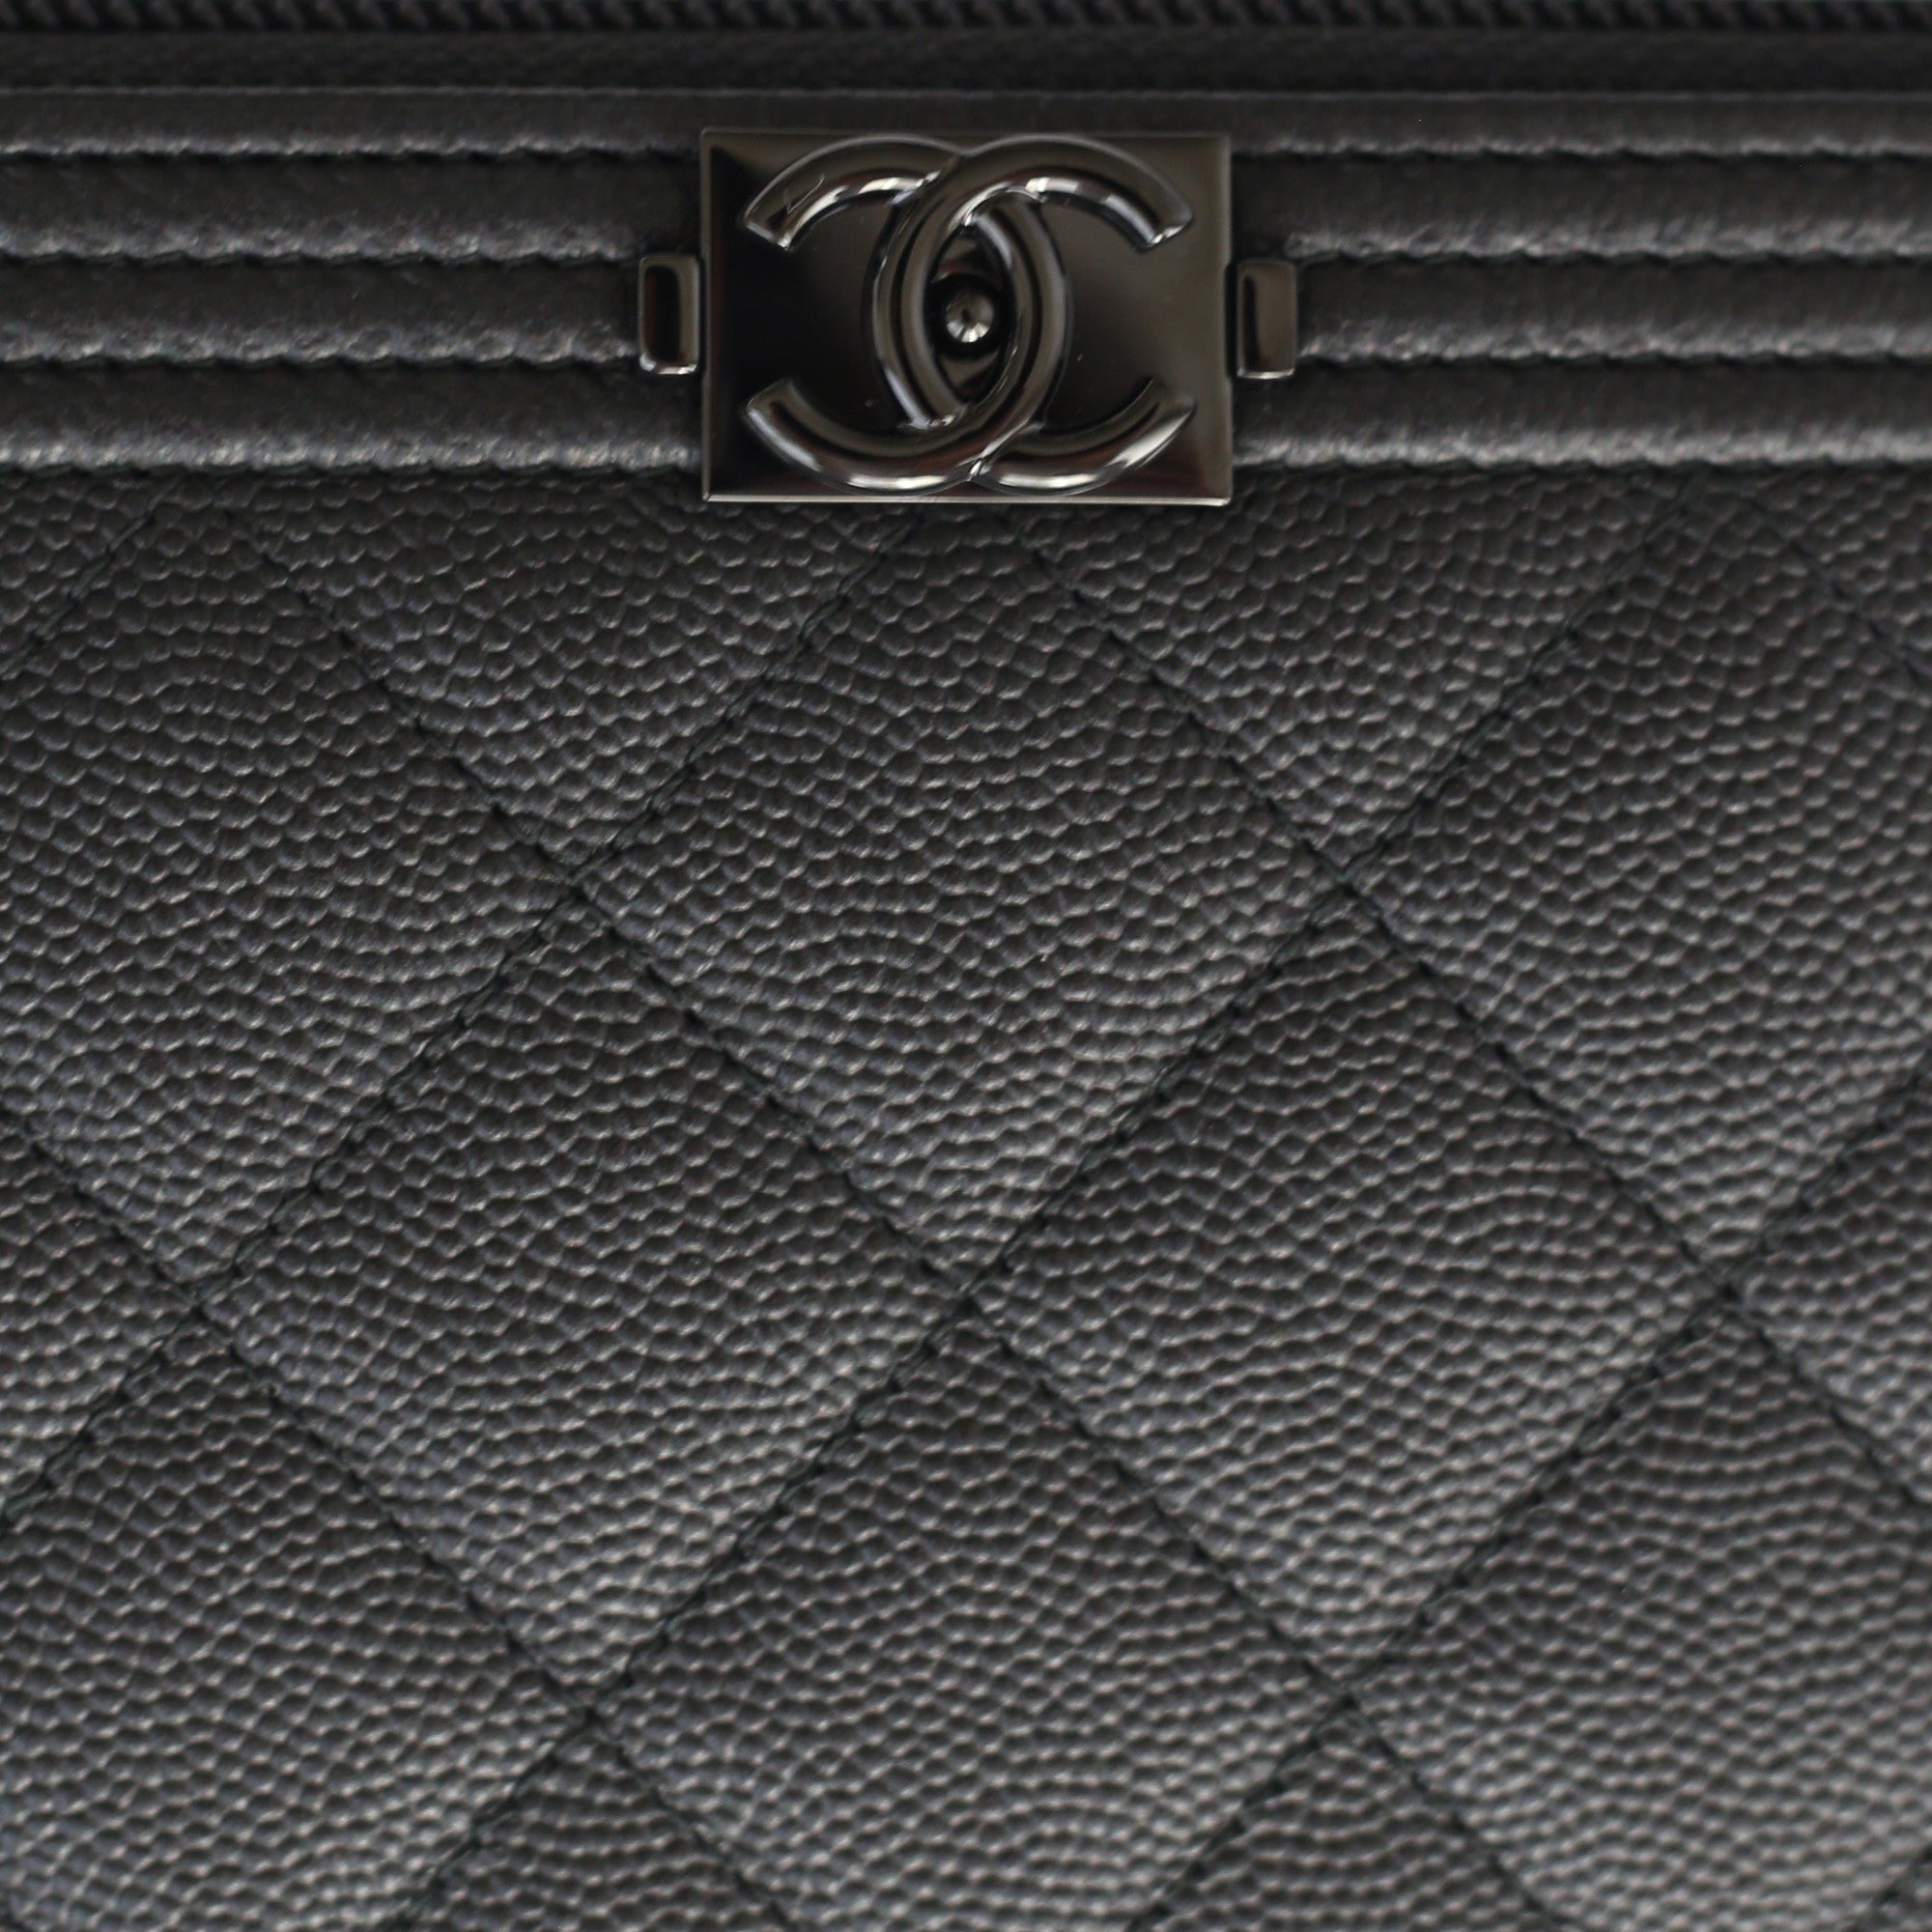 Chanel Chanel Black Caviar Leather Large CC Logo Long Wallet